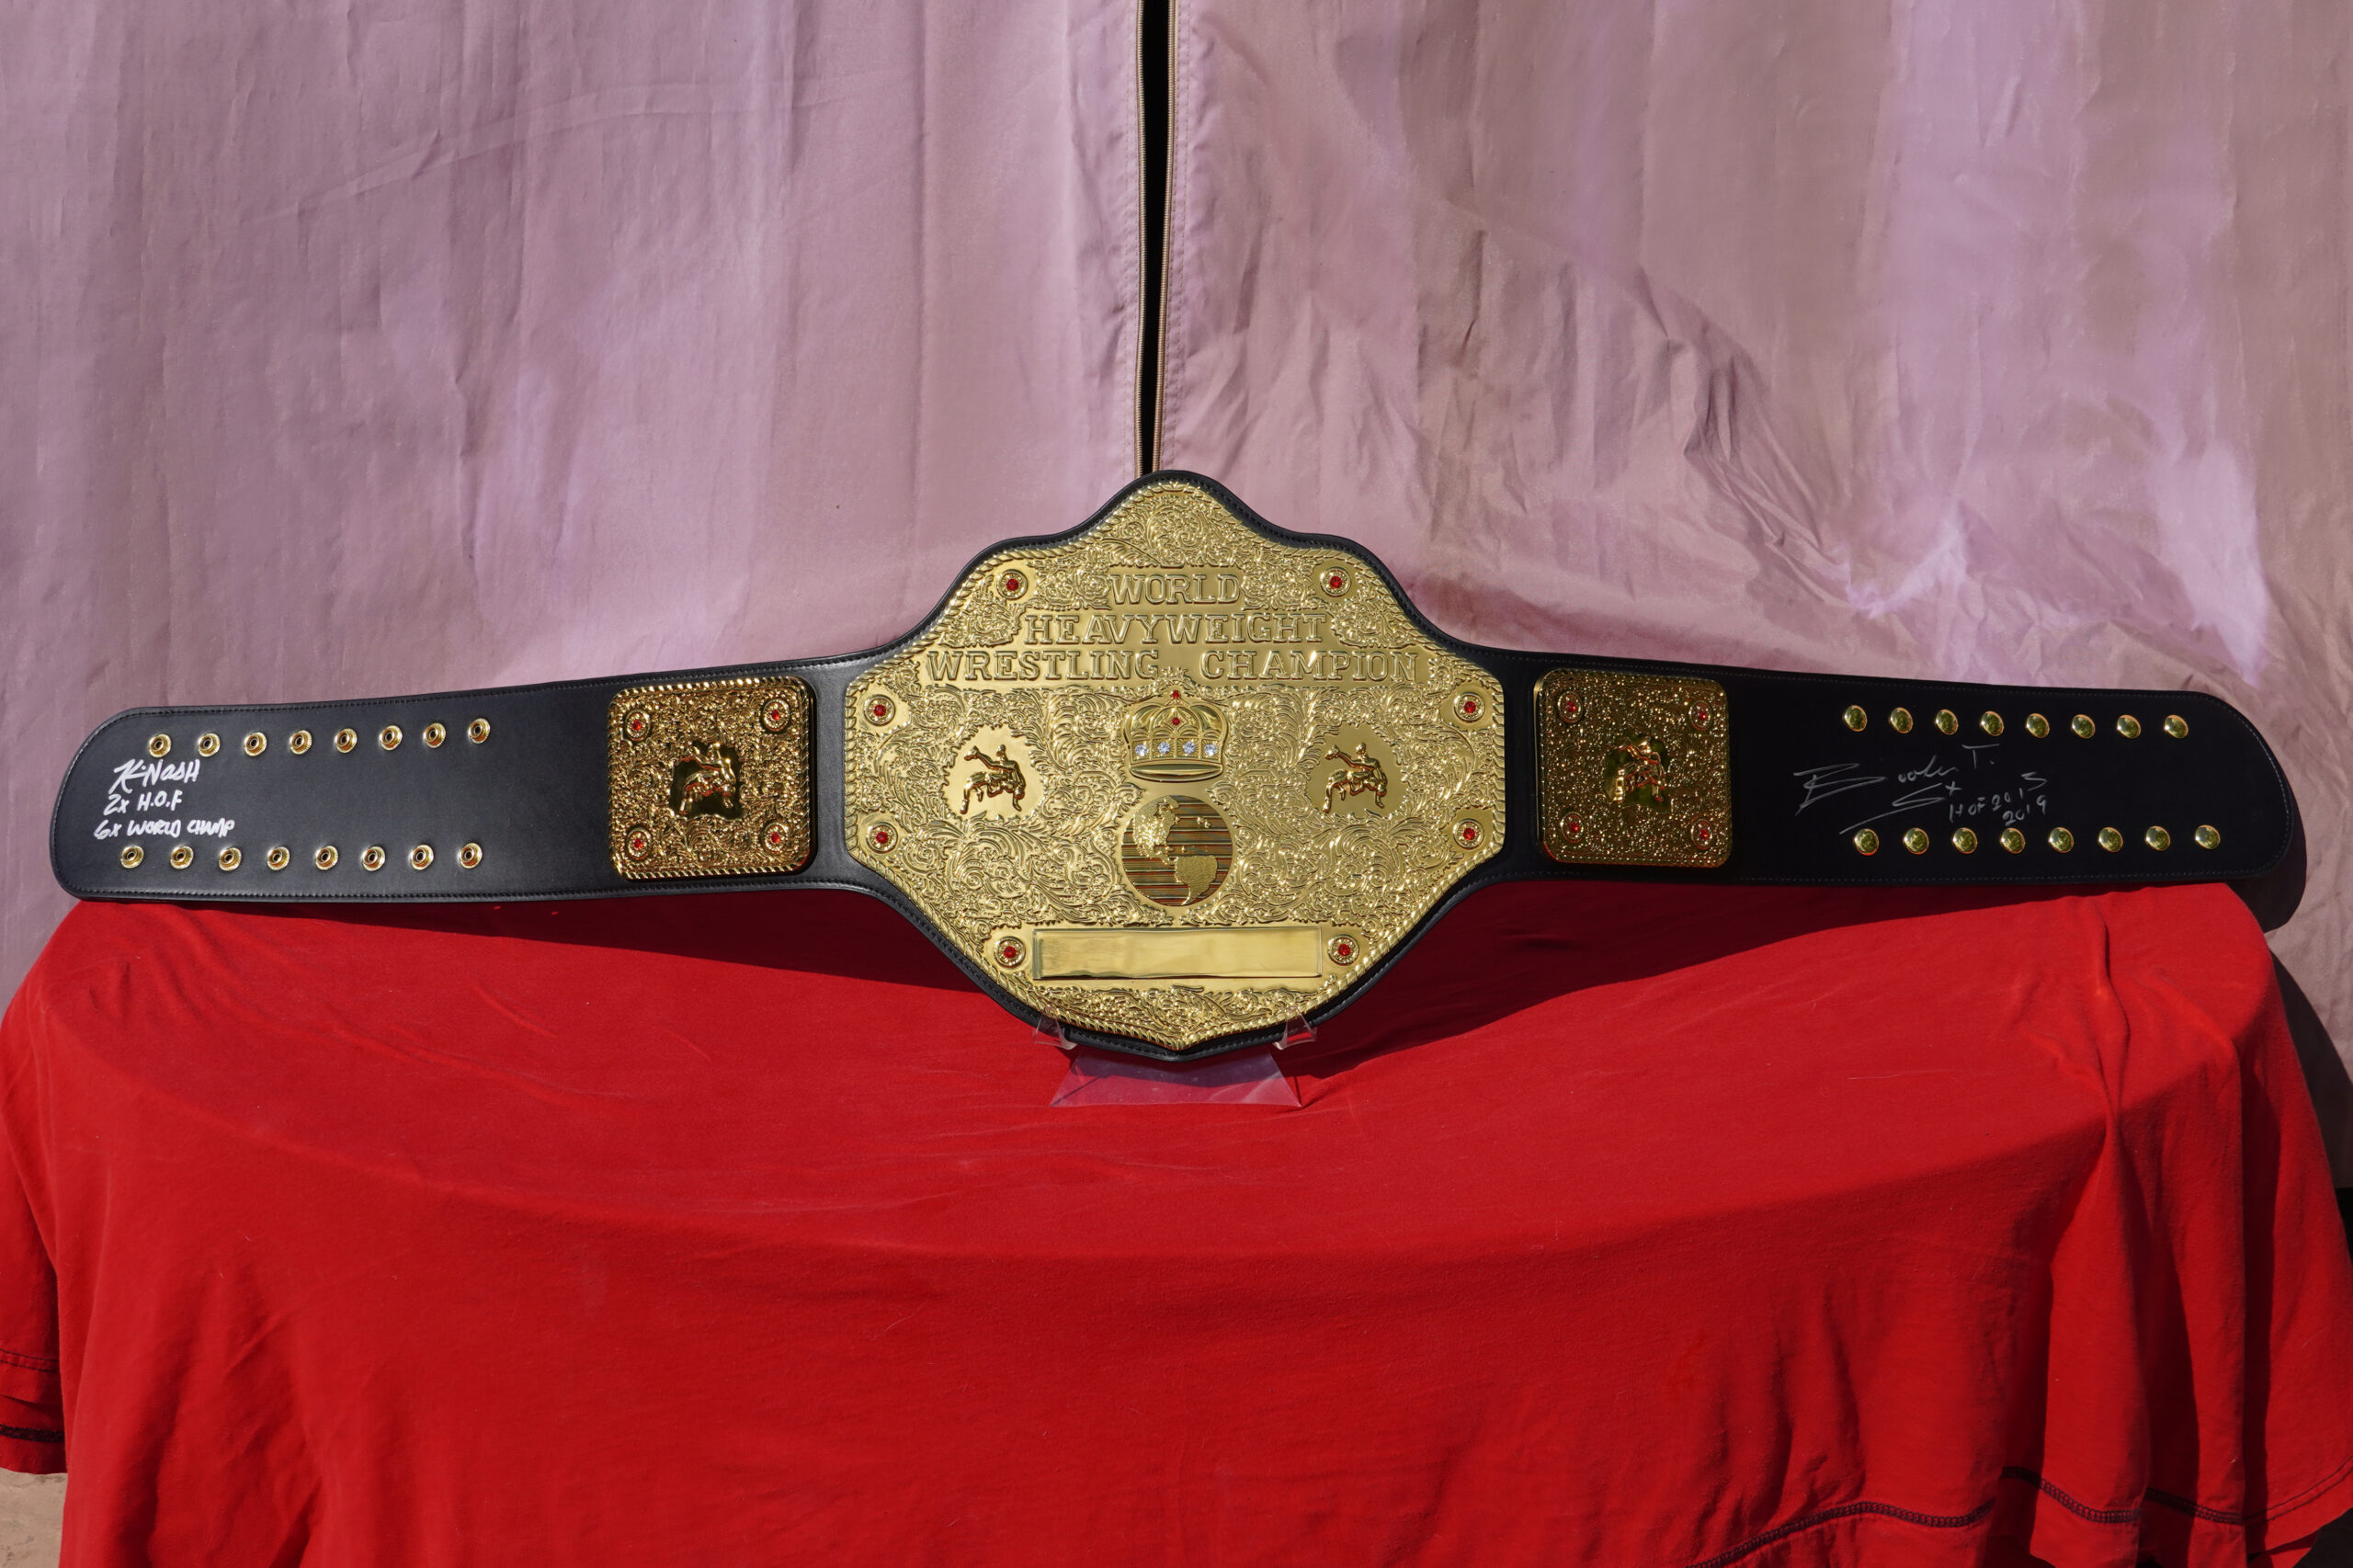 Fashion Fandu Big Gold Heavyweight Championship Title Belt Black Red Strap 